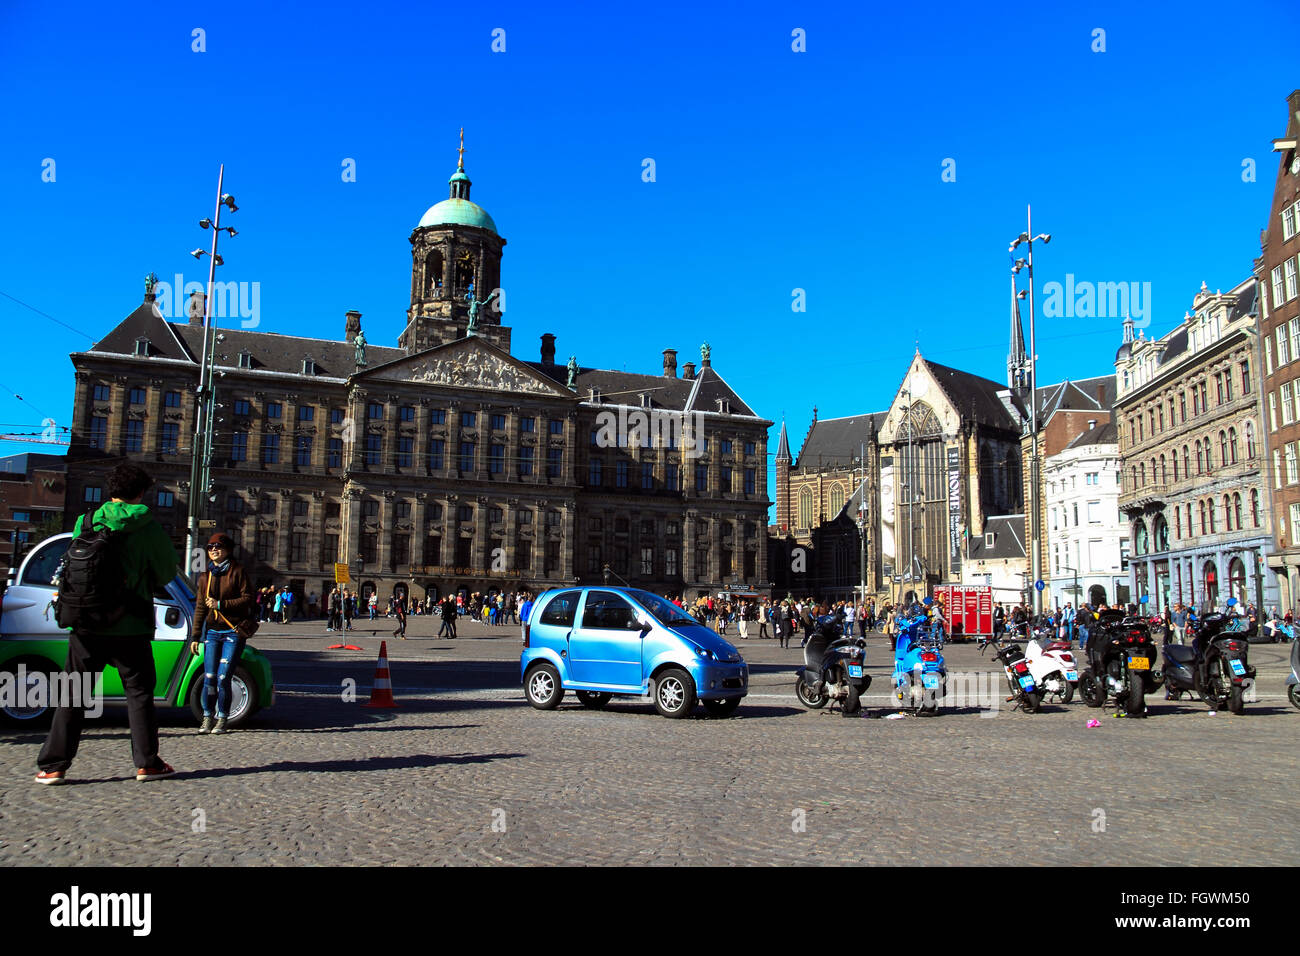 Il Palazzo Reale e la Nieuwe Kerk, nuova chiesa, Piazza Dam, Amsterdam, Paesi Bassi Foto Stock